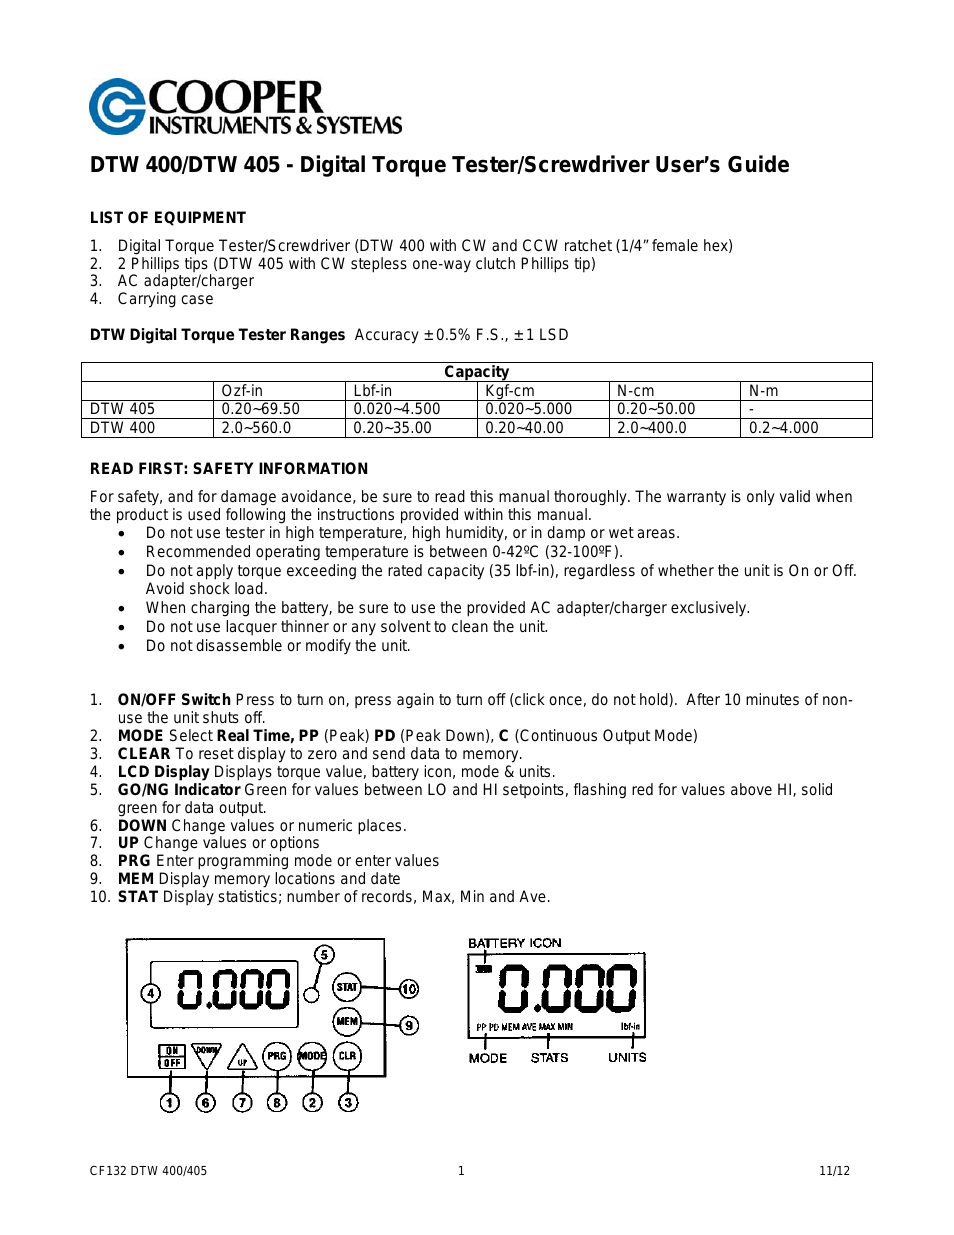 DTW 400 Digital Torque Tester / Screwdriver